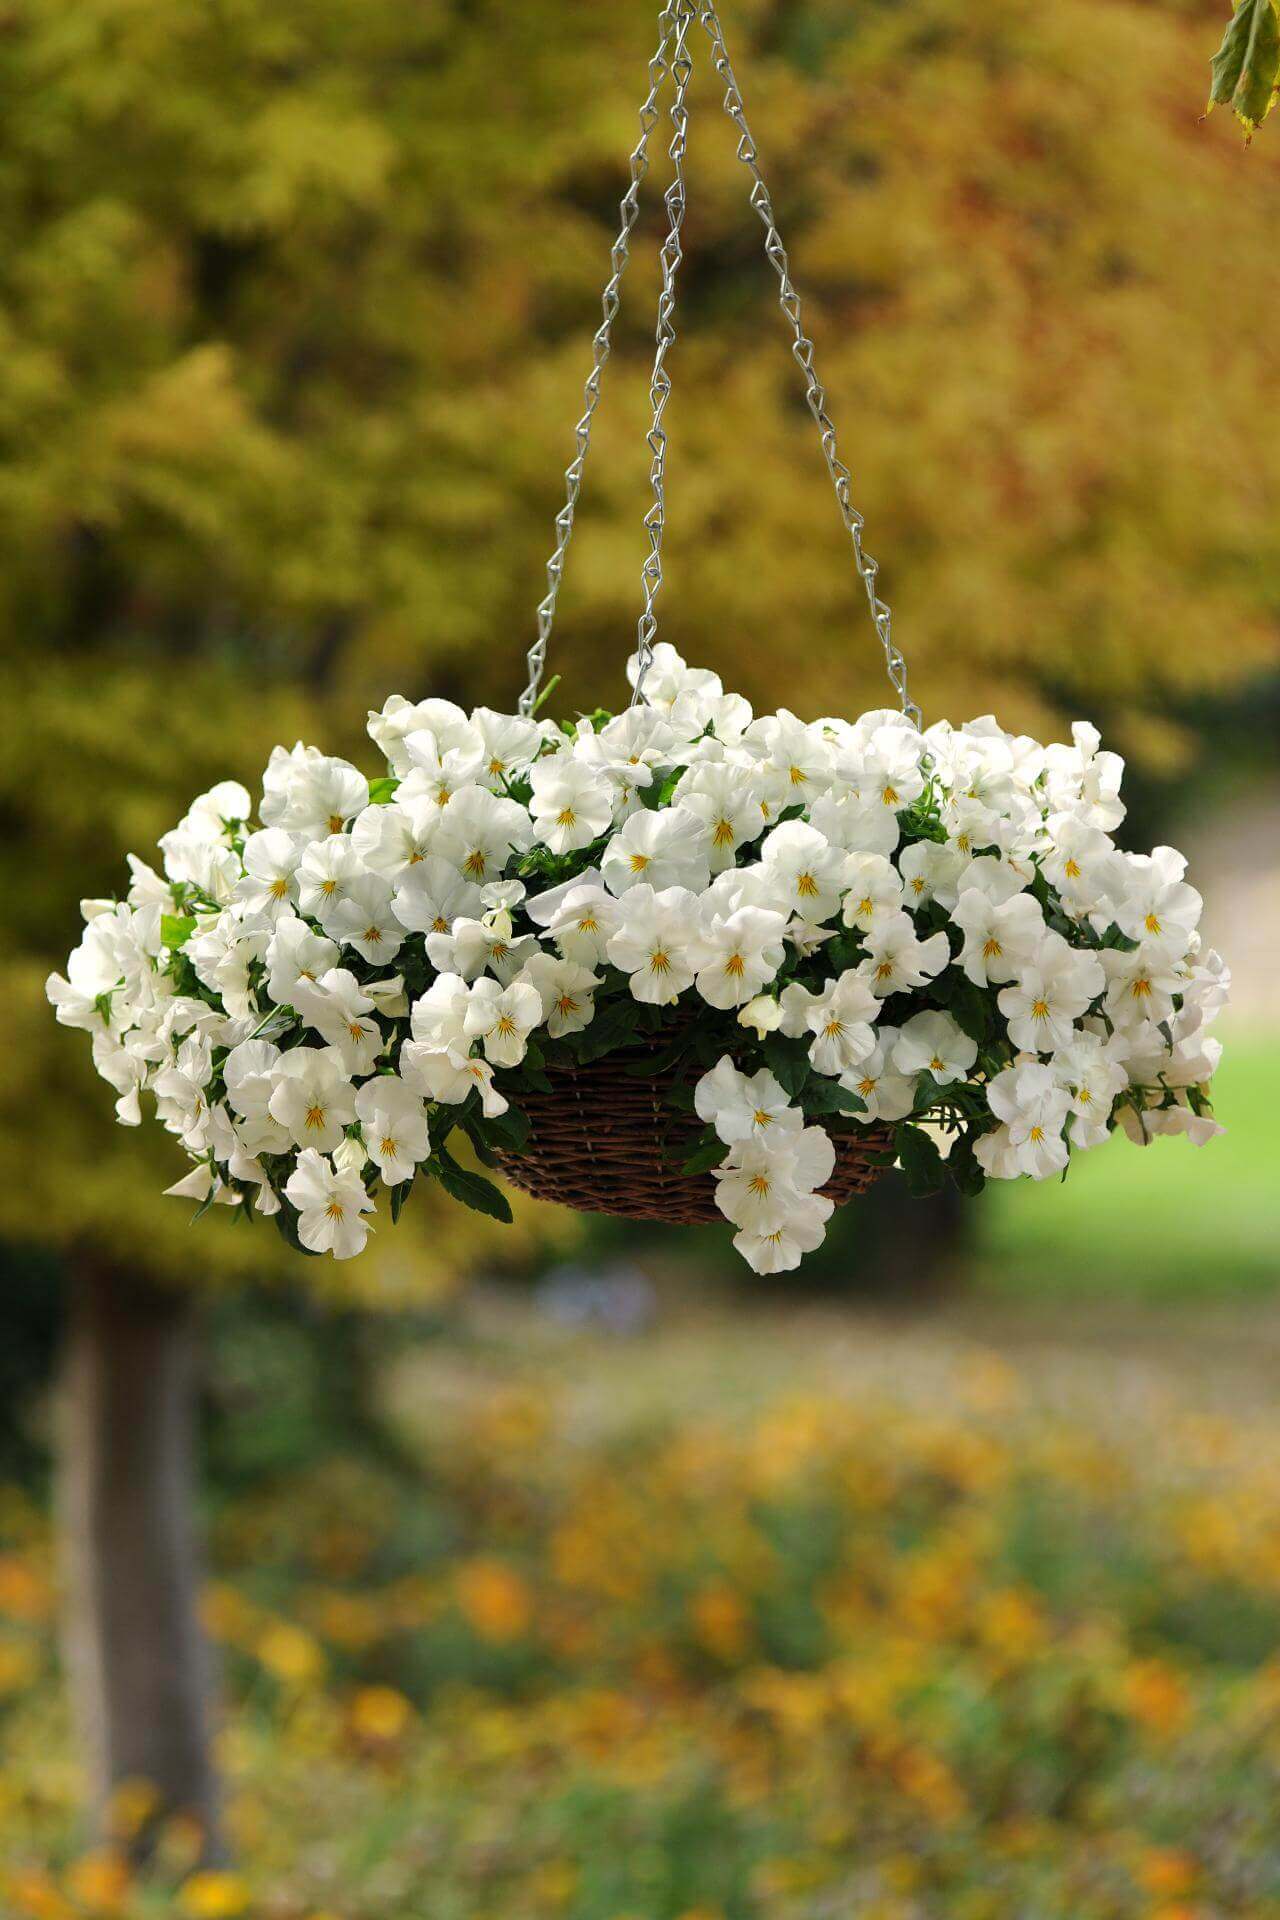 Sweetly Simple Woven Flower Basket | DIY Outdoor Hanging Planter Ideas | Plant Pot Design Ideas